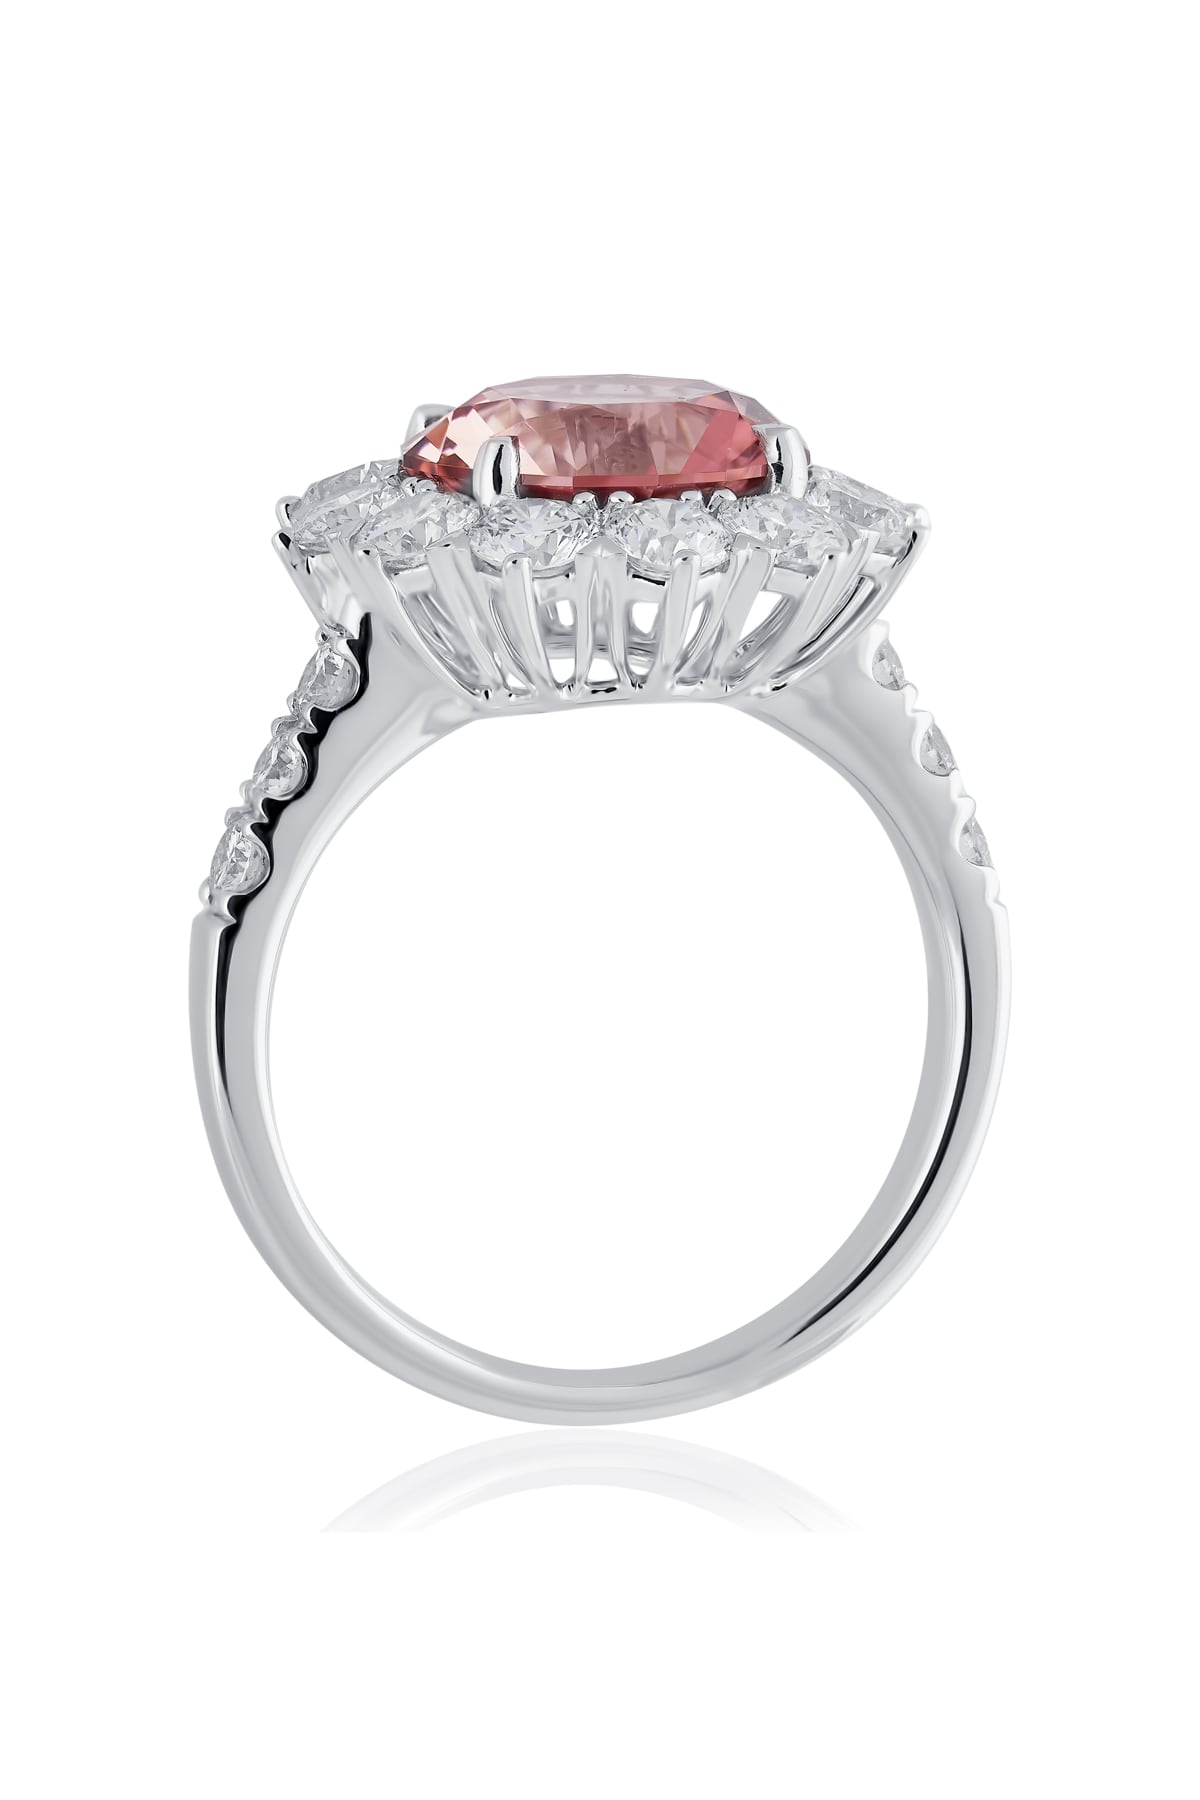 Blush Pink Tourmaline Ring With Diamond Halo from LeGassick.